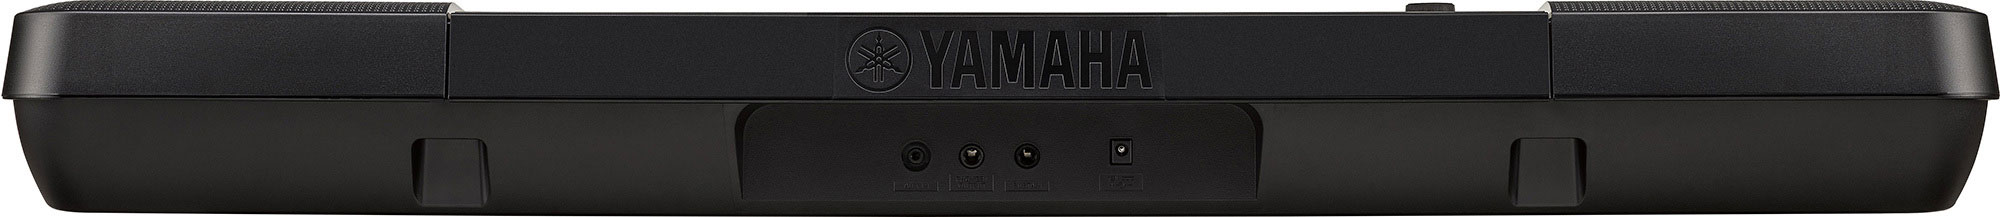 Yamaha Psr-e263 - - Entertainer Keyboard - Variation 2